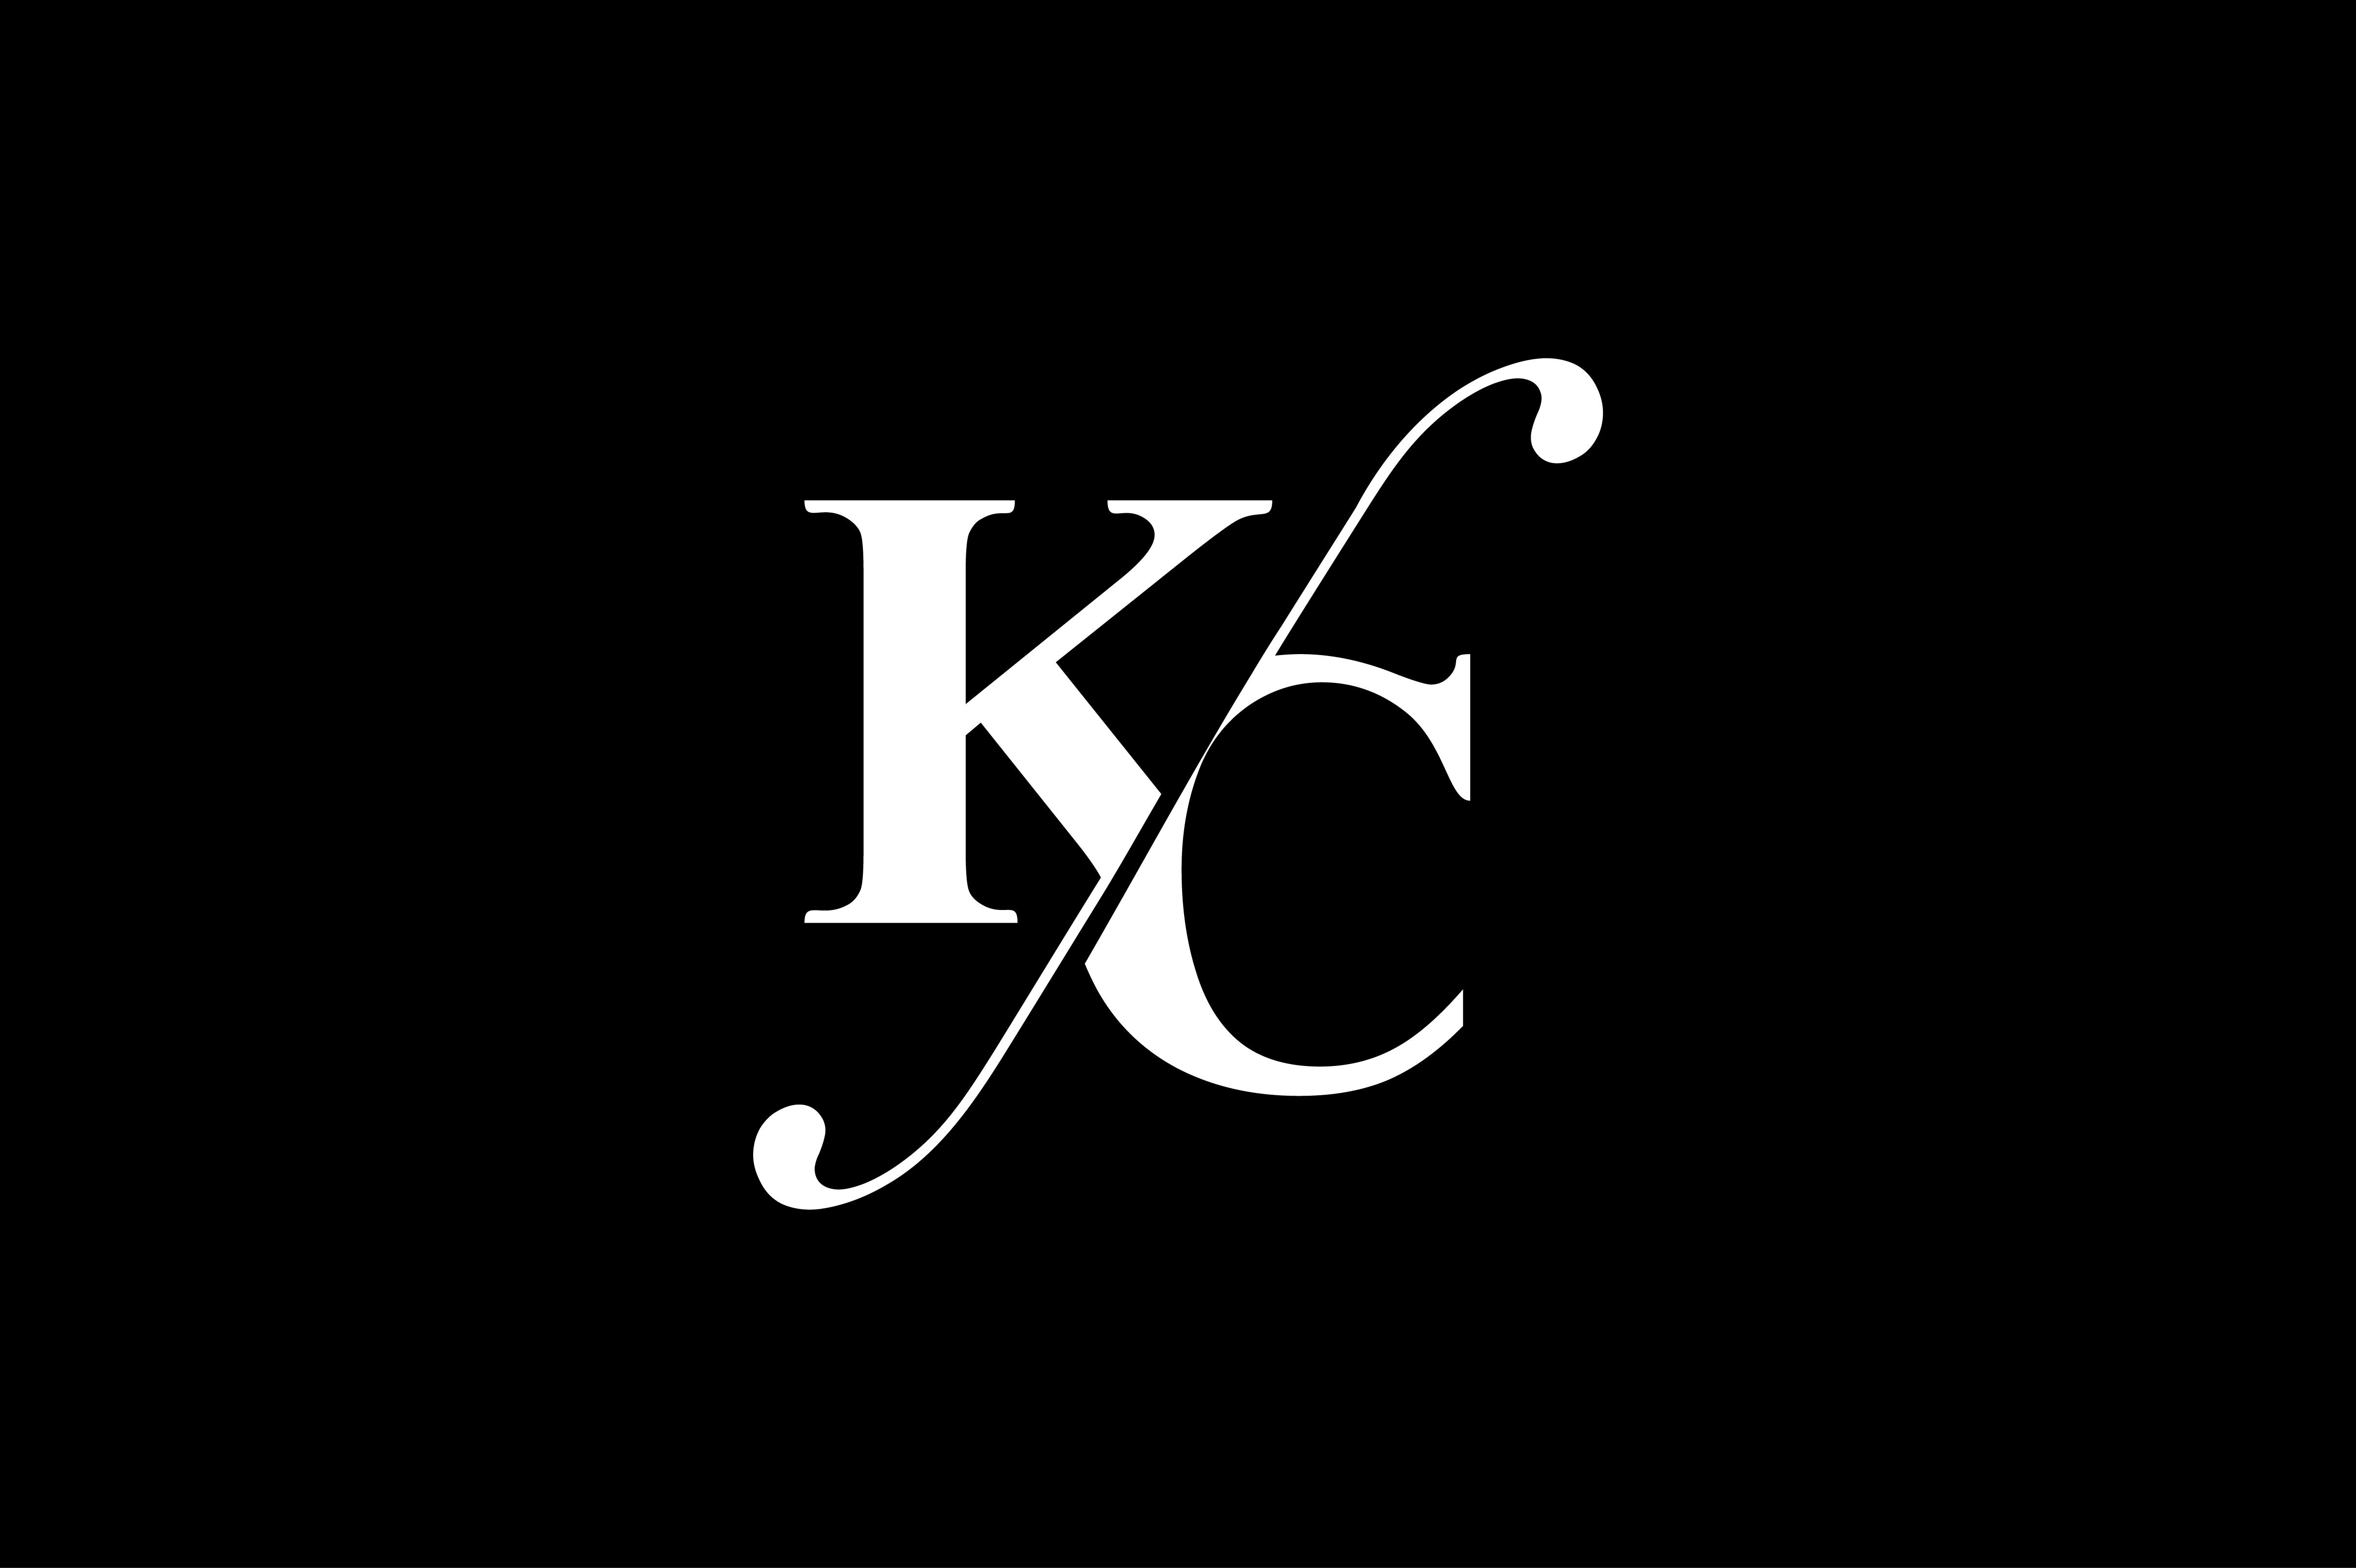 Kc Monogram Logo Design By Vectorseller Thehungryjpeg Com